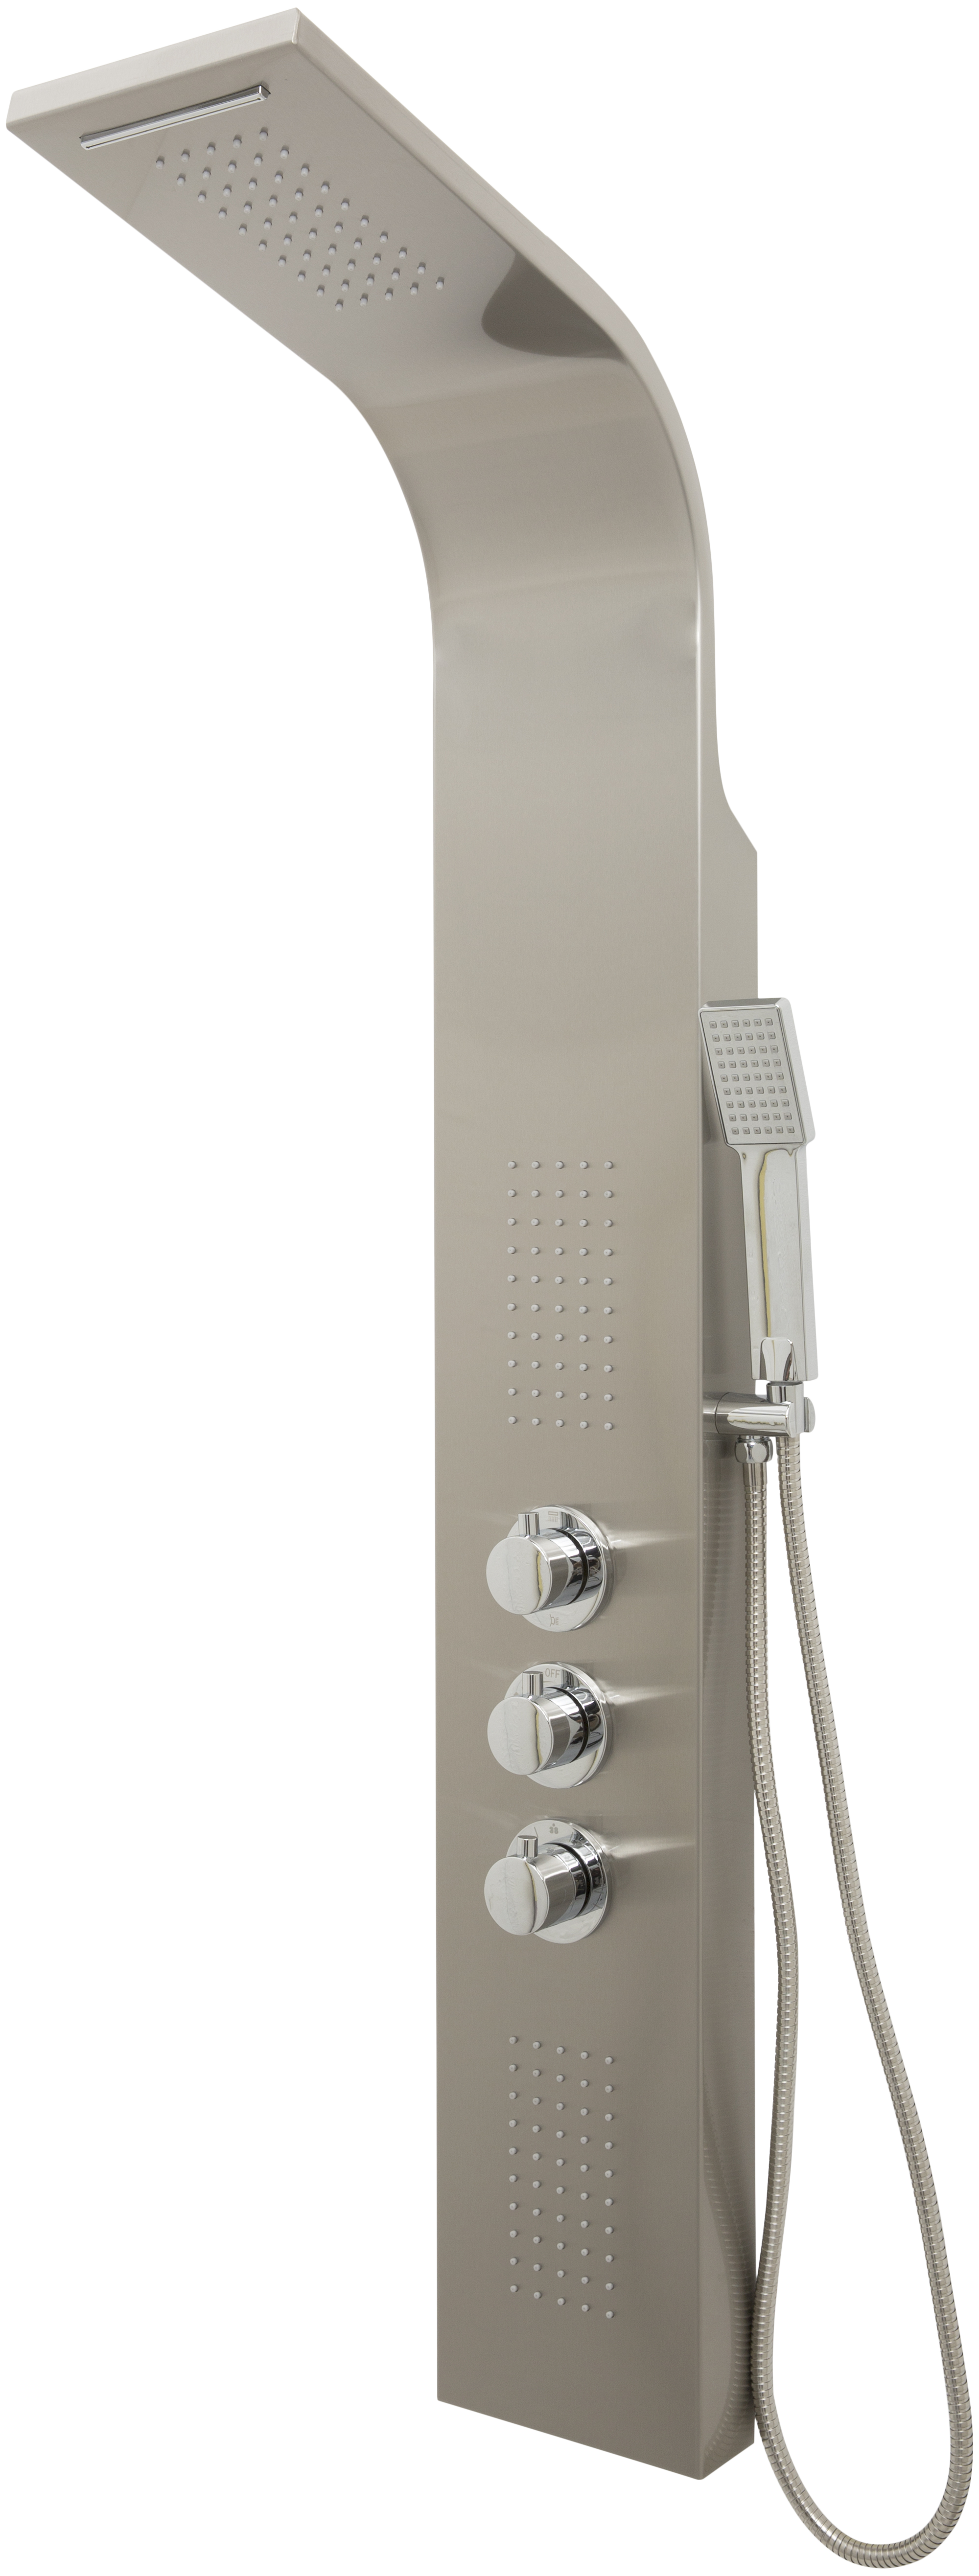 Columna de ducha hidromasaje termostática sensea cali 3 gris cromado cepillado